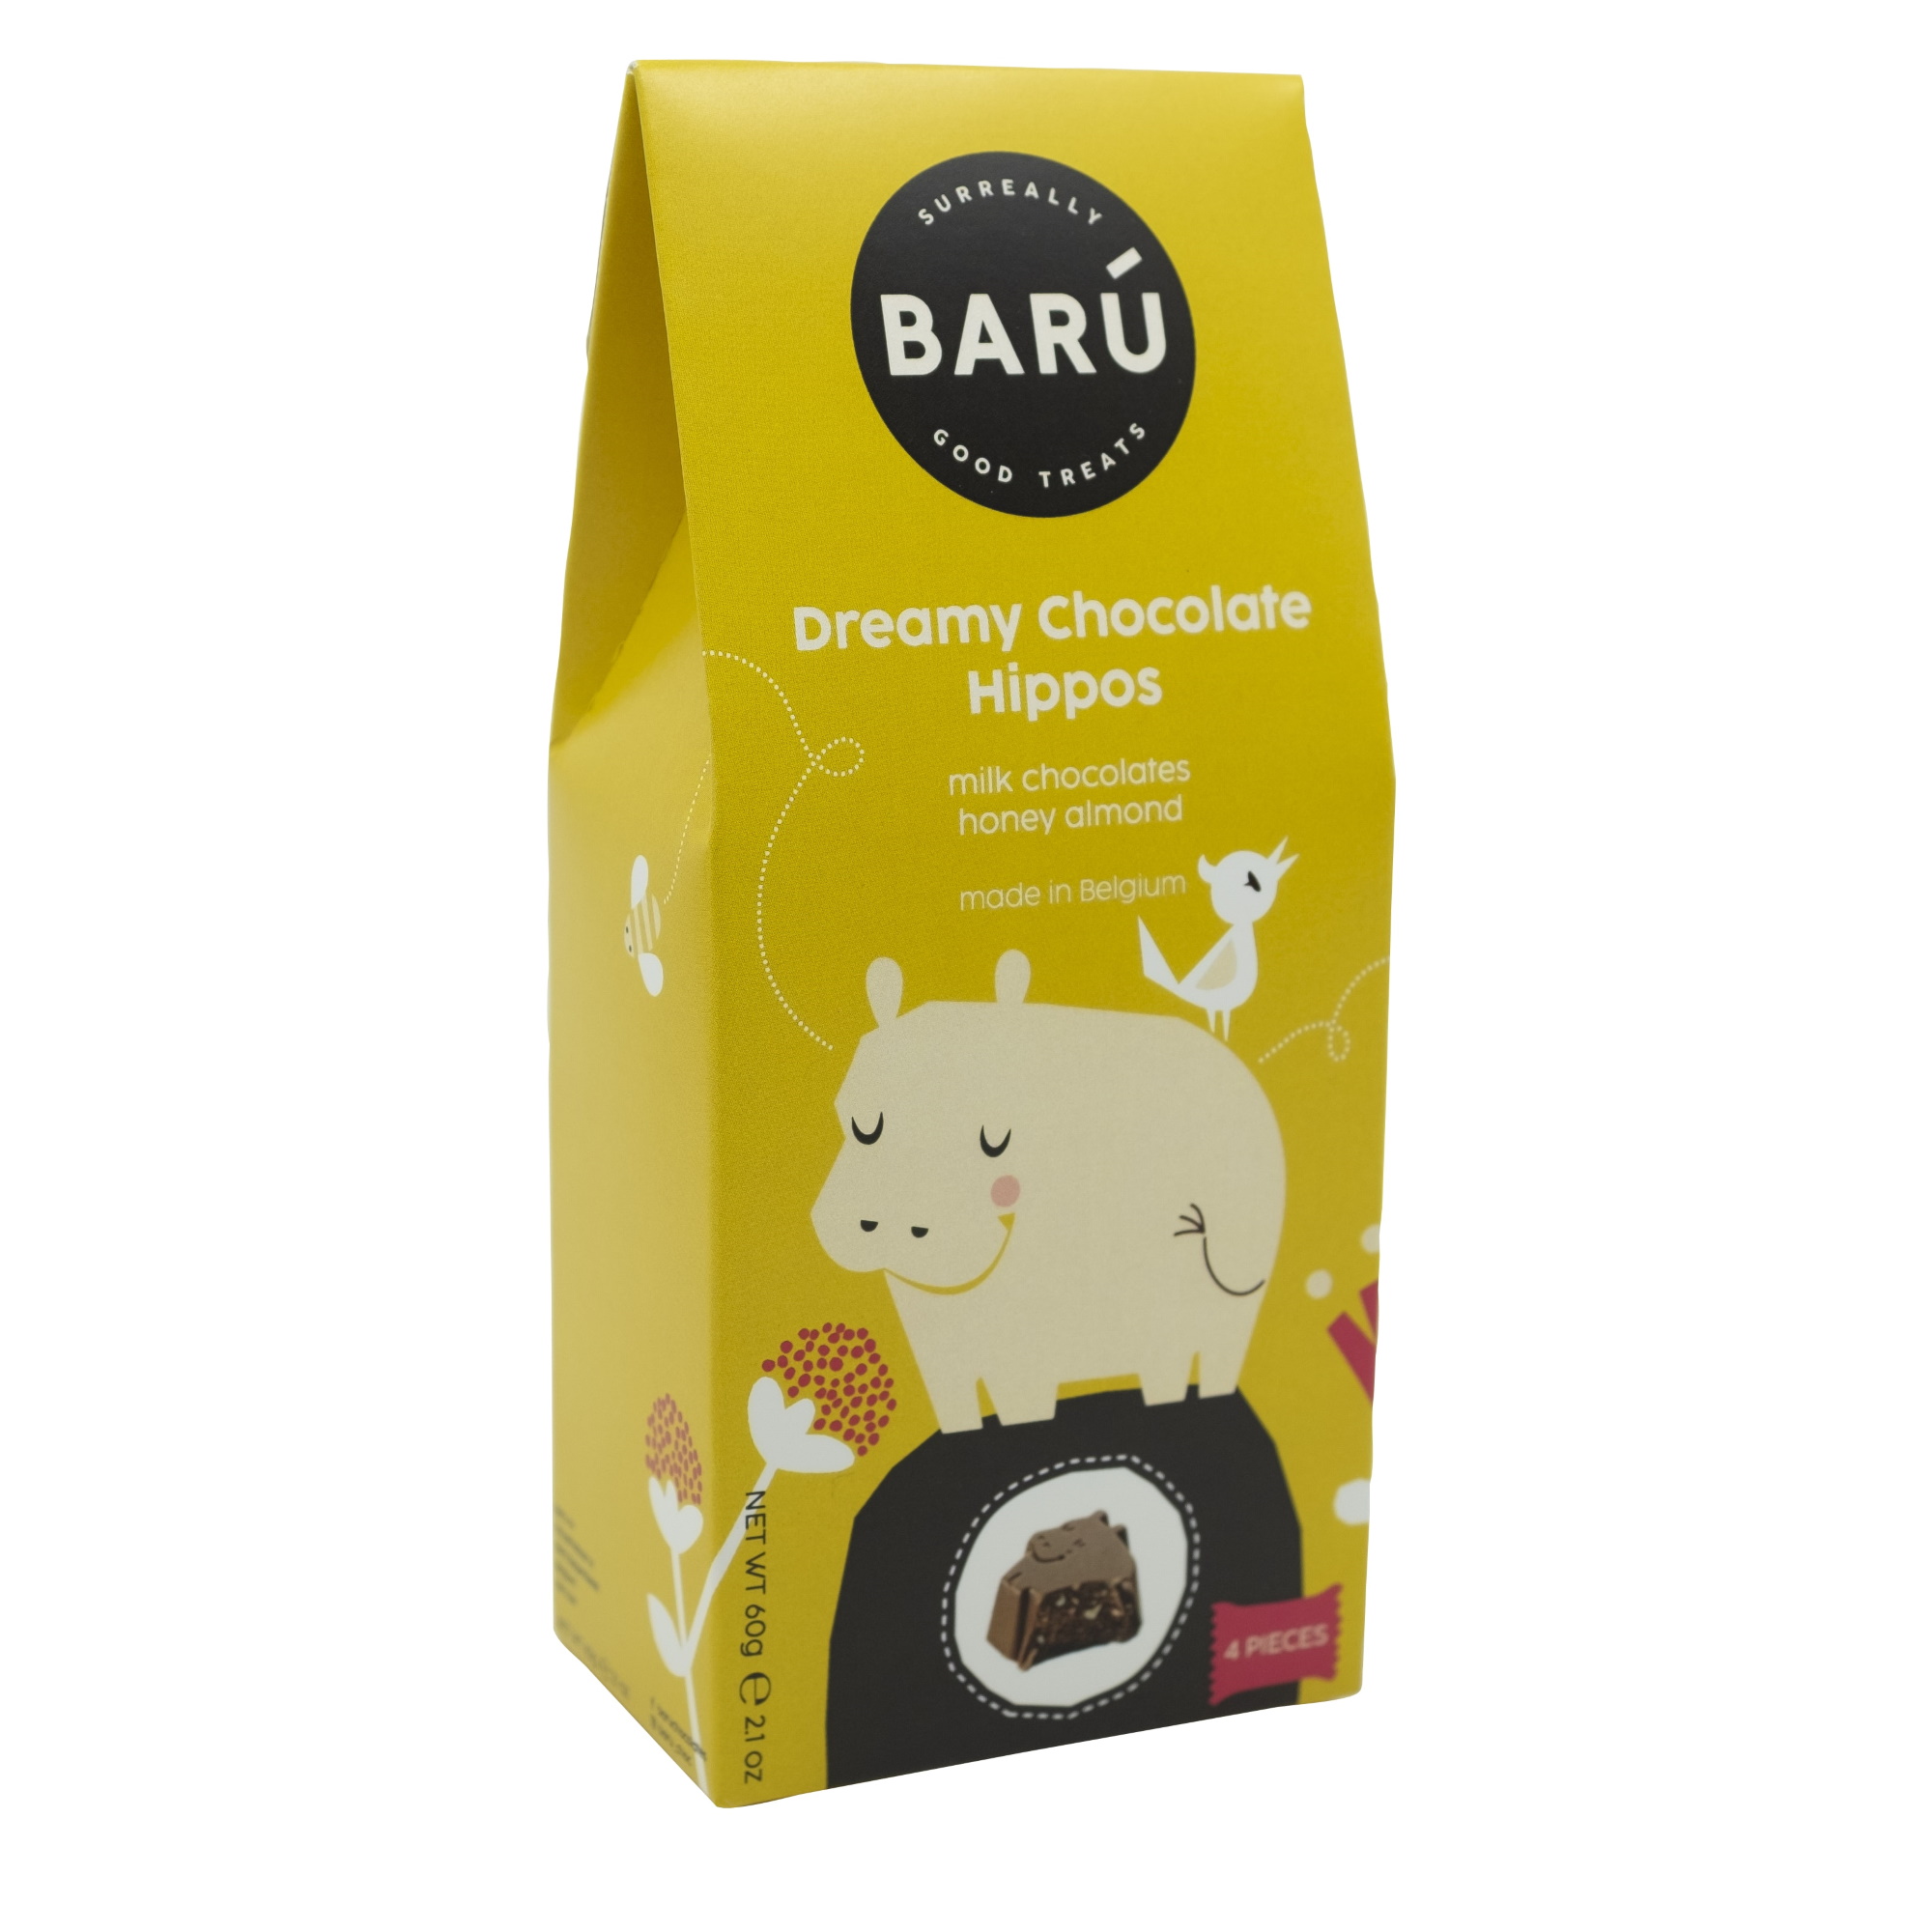 Barú Milk Chocolate Dreamy Chocolate Hippos with Honey Almond